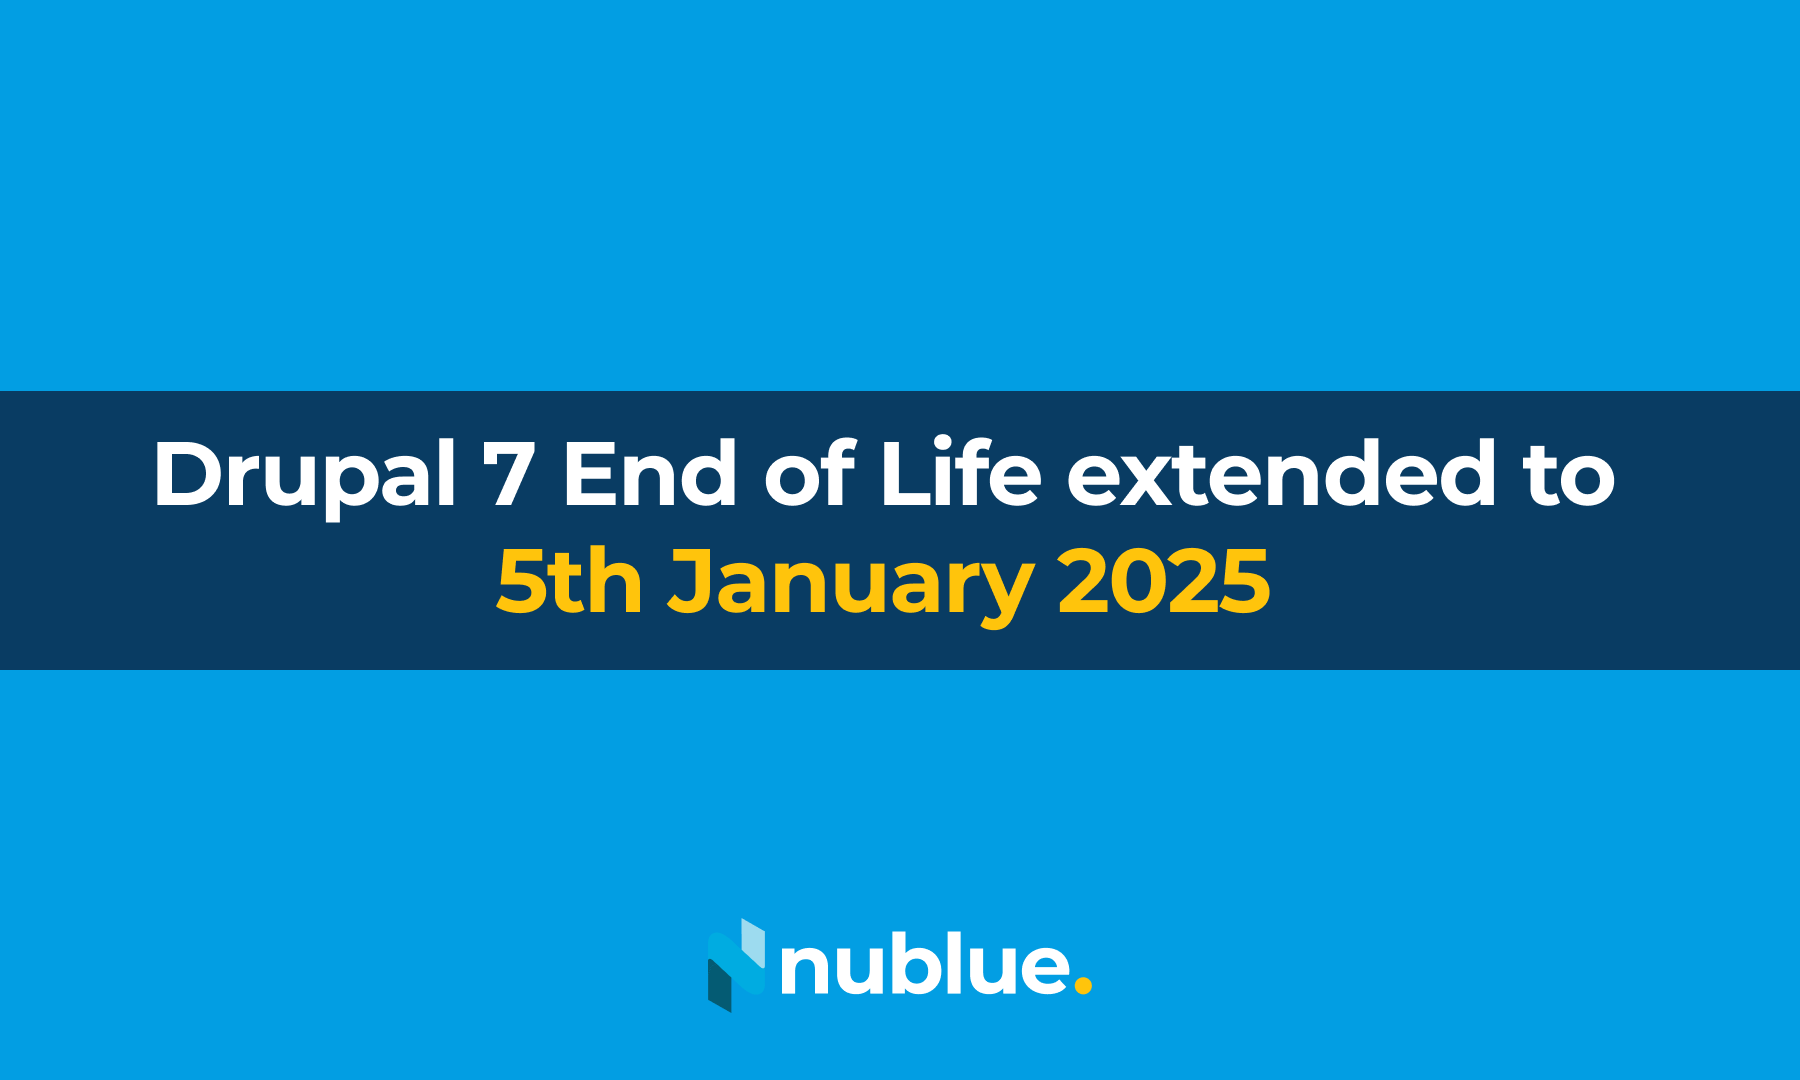 Drupal 7 End-of-Life Timeline Update: New Extension Granted